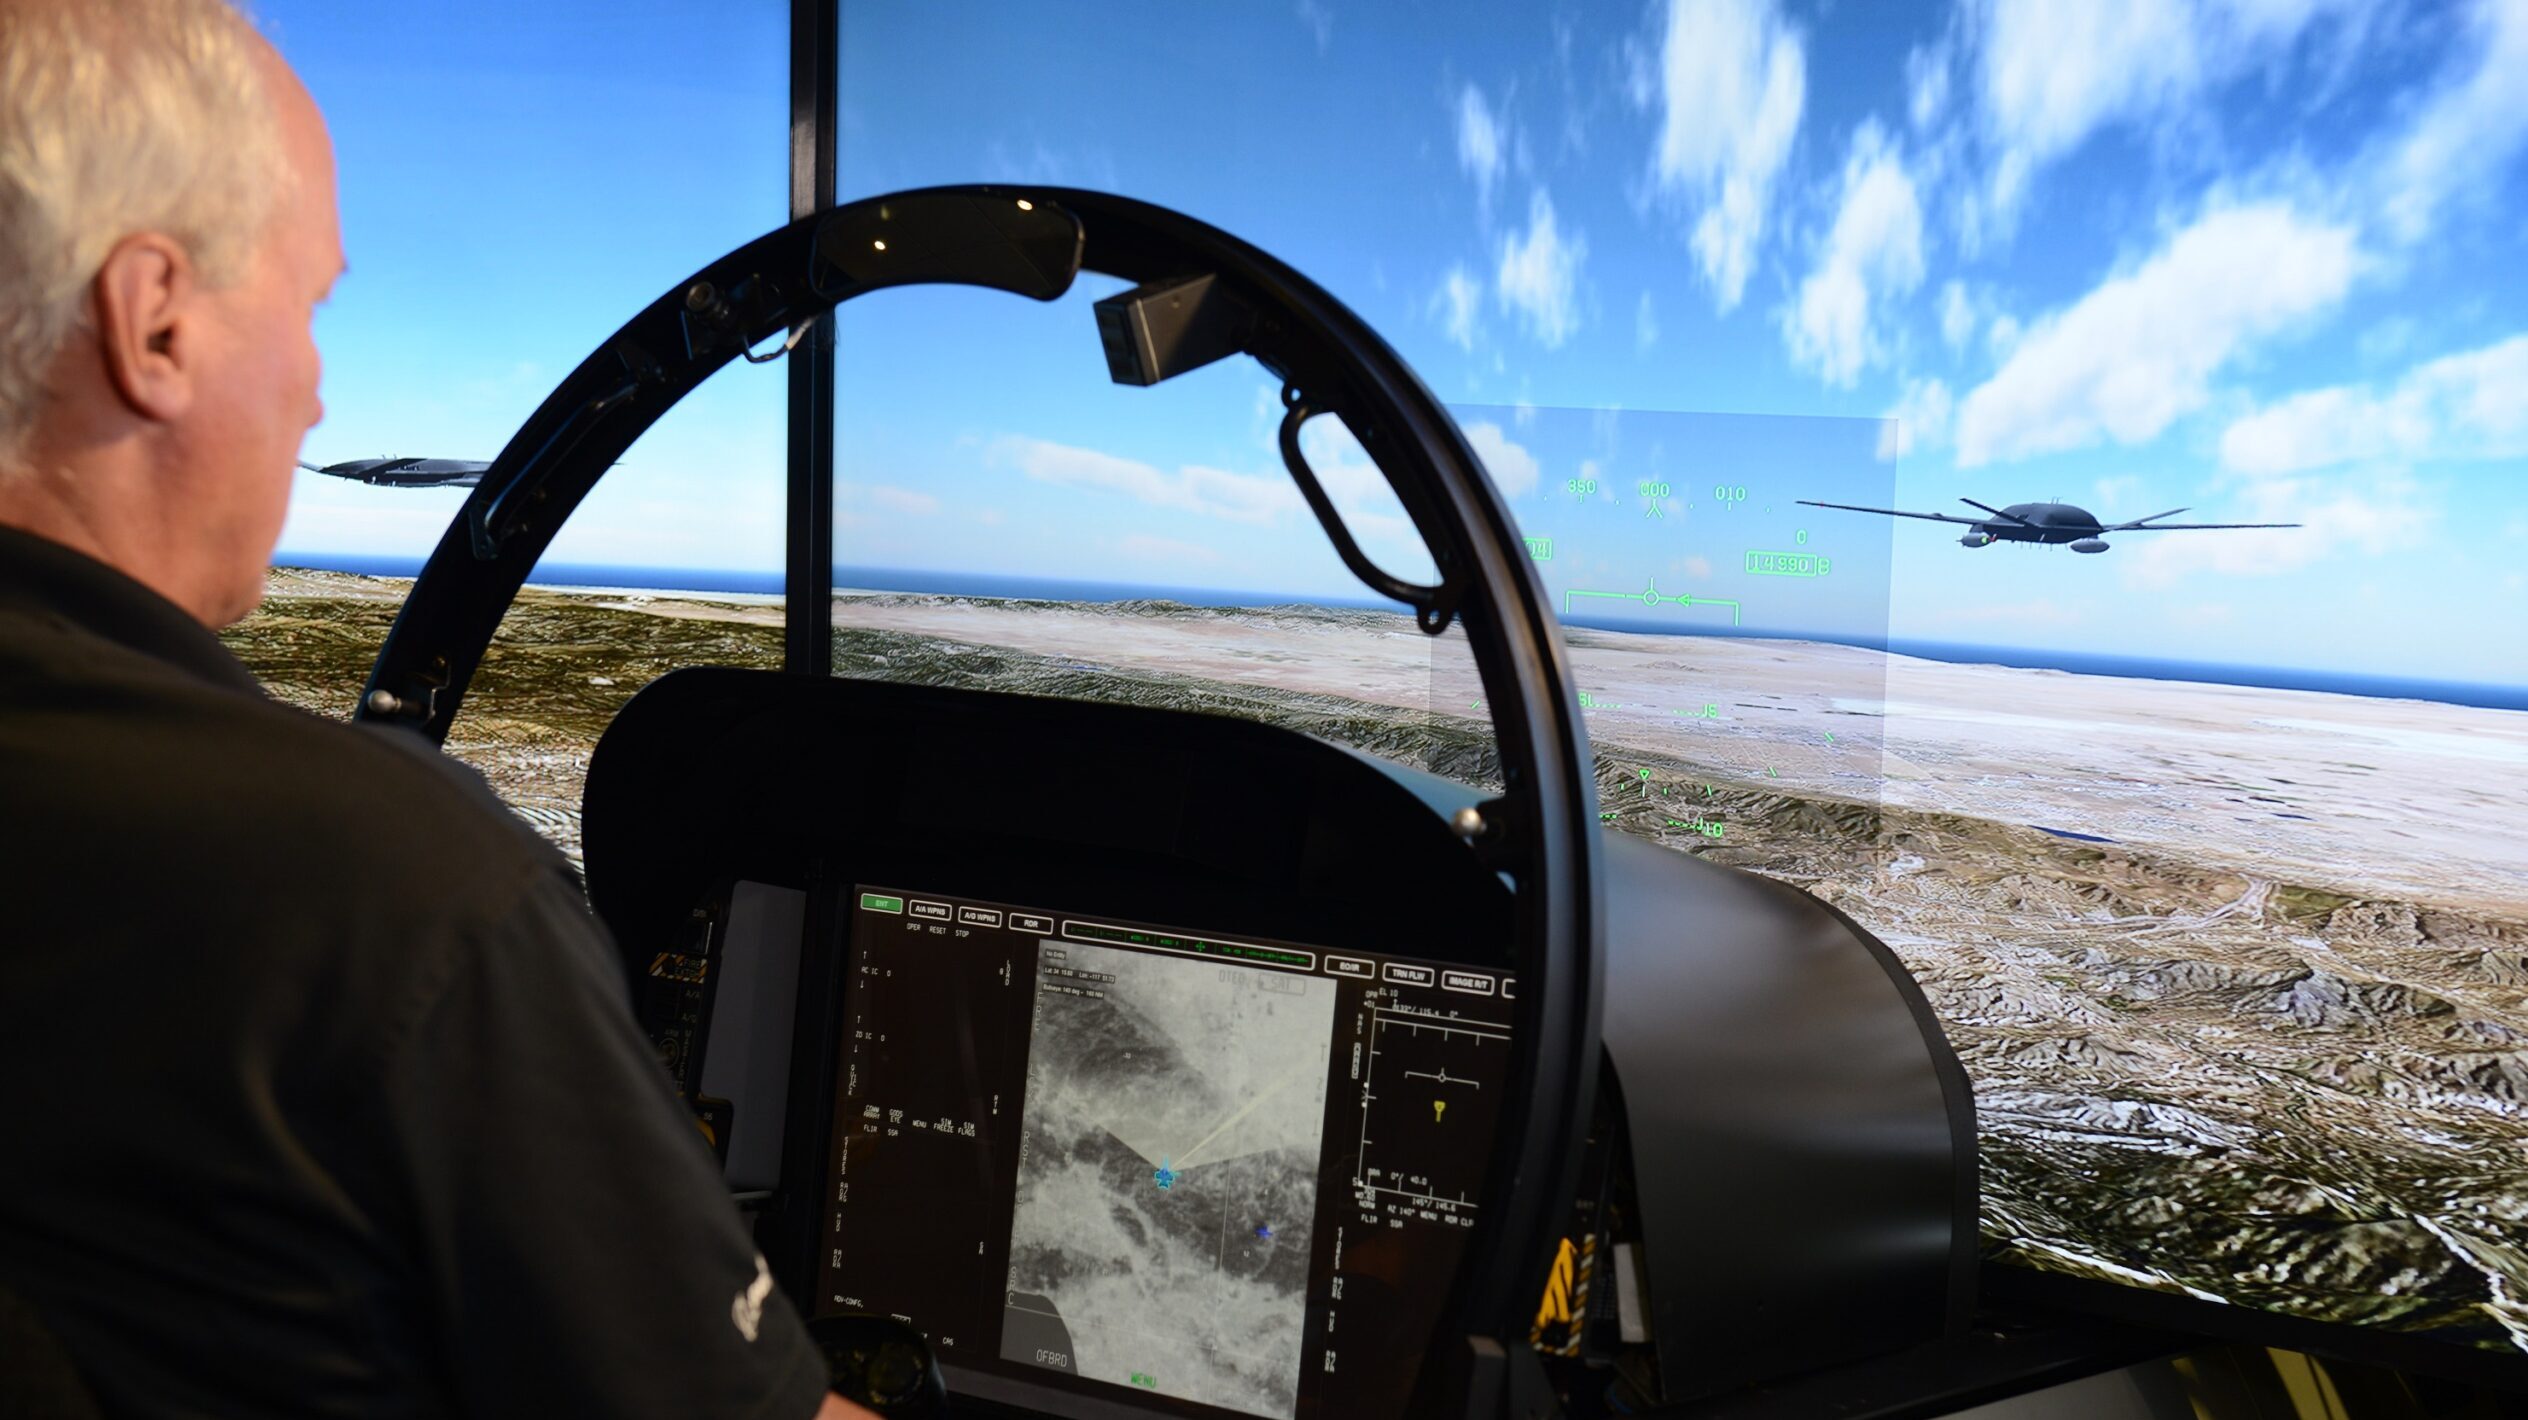 Boeing successfully demos MQ-25 control through P-8, autonomy software